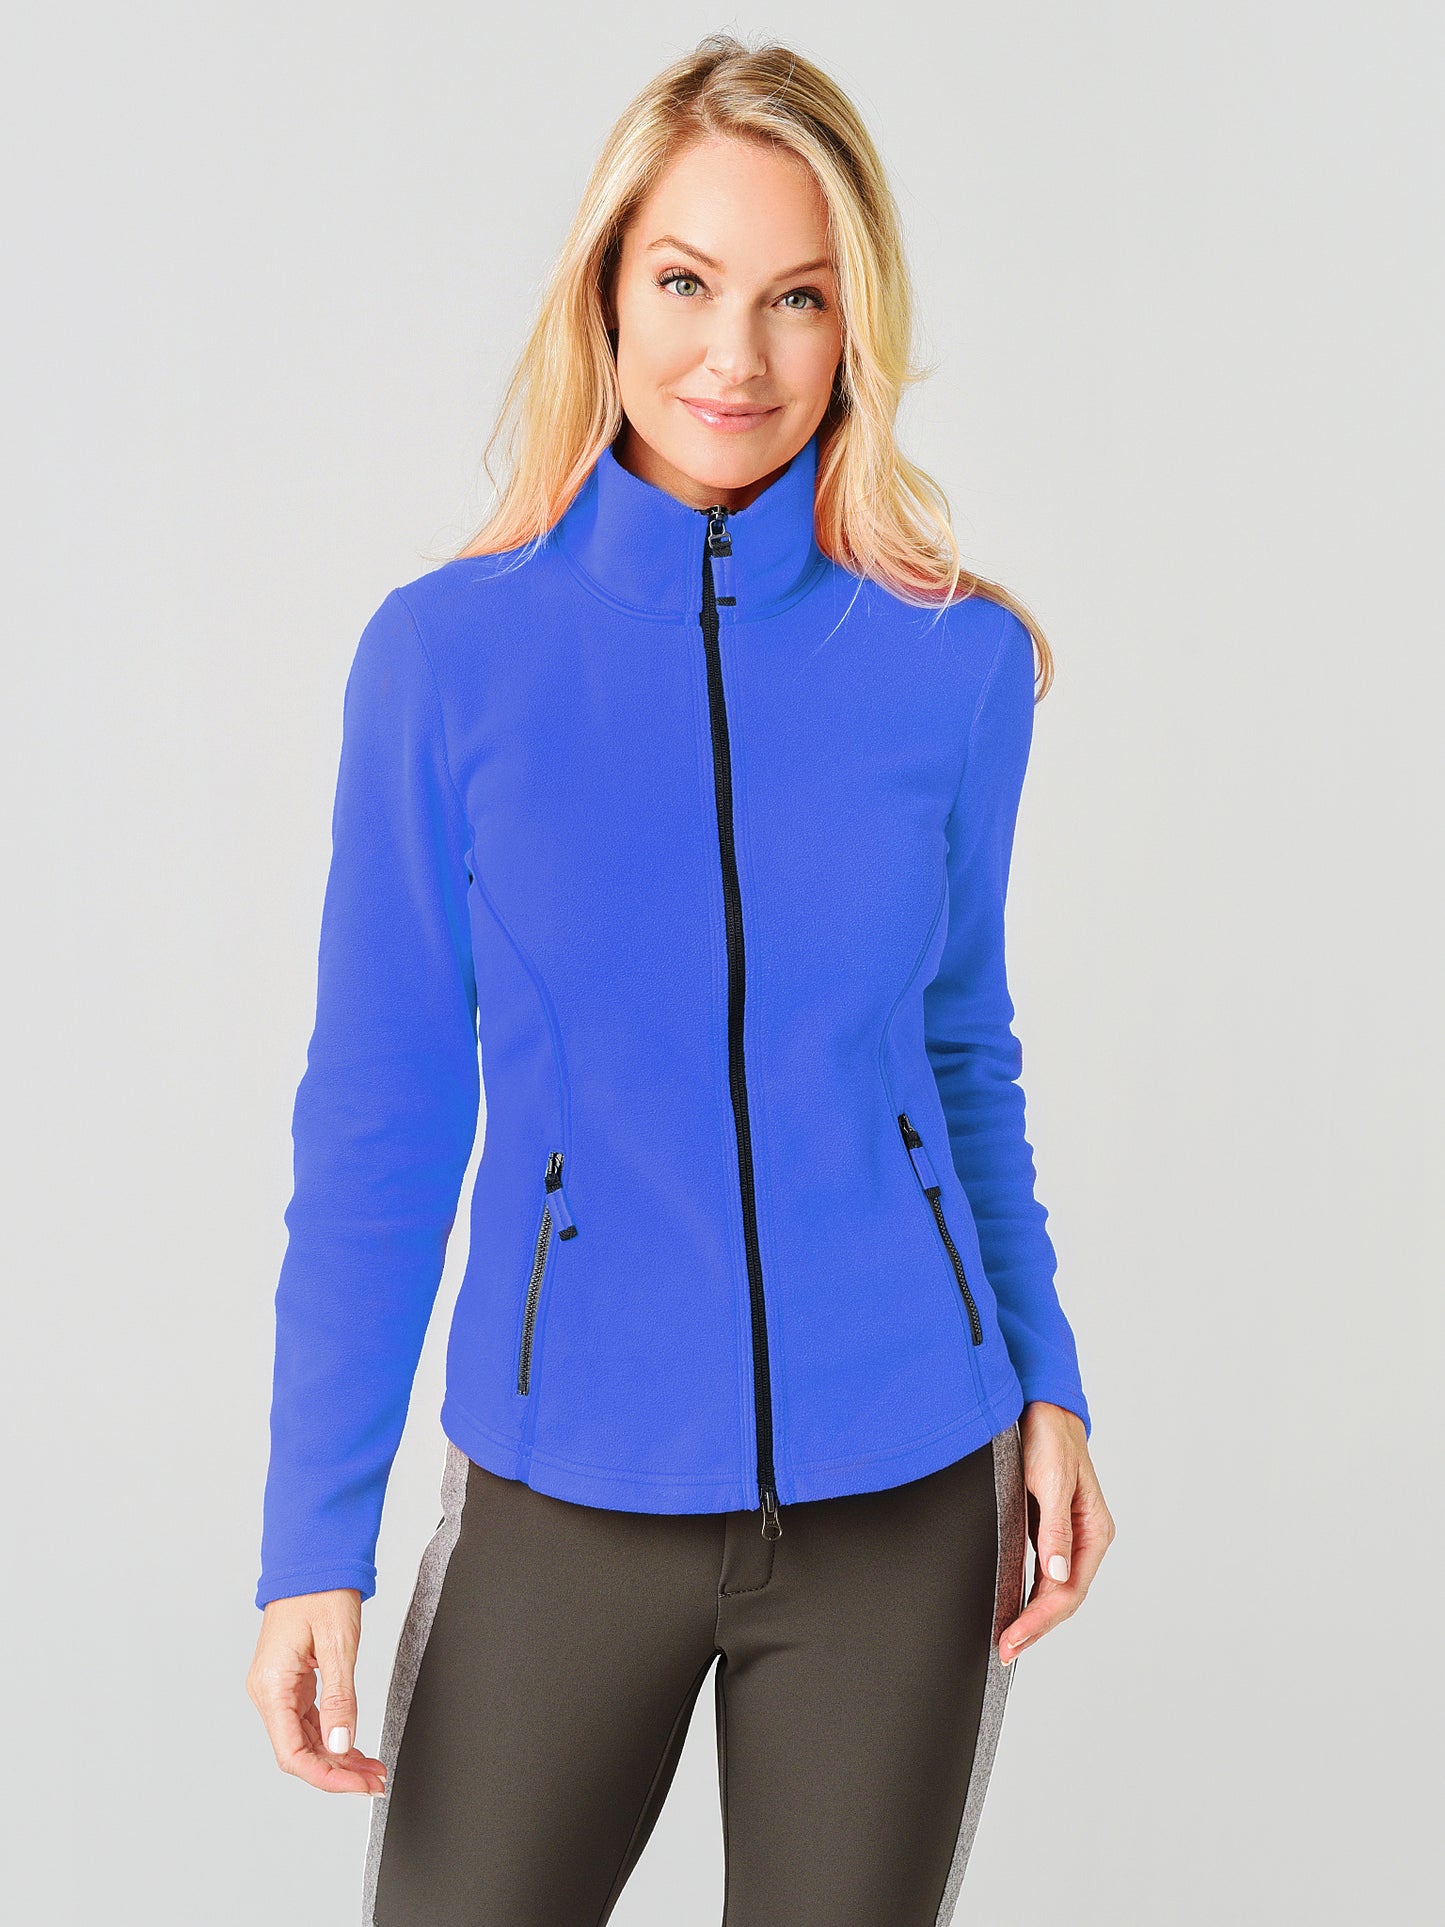 Frauenschuh Women's Vera Ski Fleece Jacket